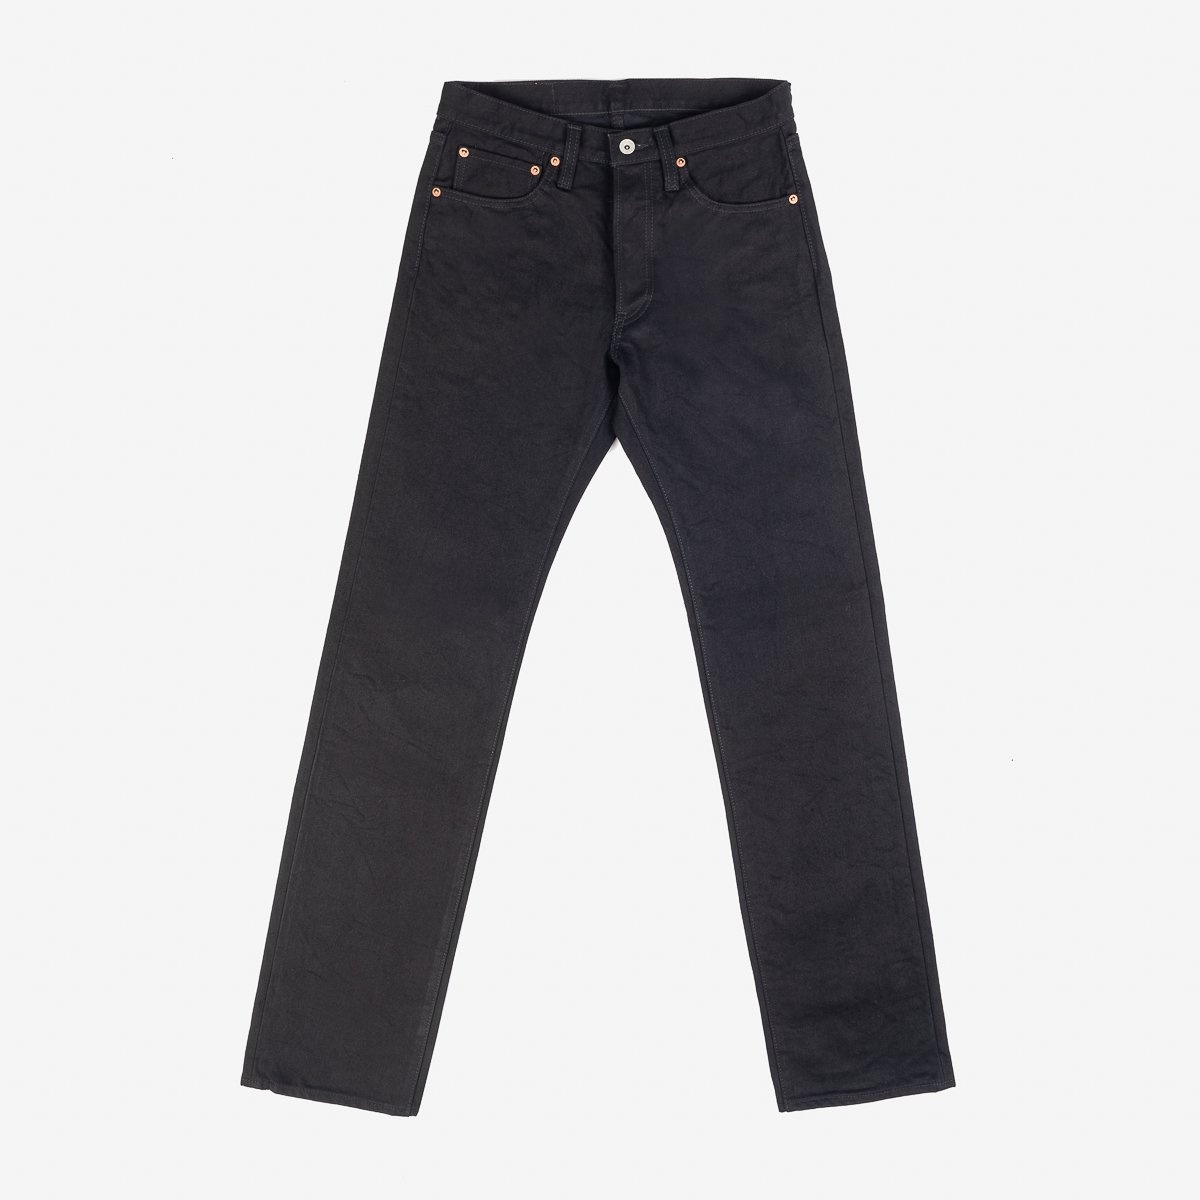 IH-634S-142bb 14oz Selvedge Denim Straight Cut Jeans - Black/Black - 1